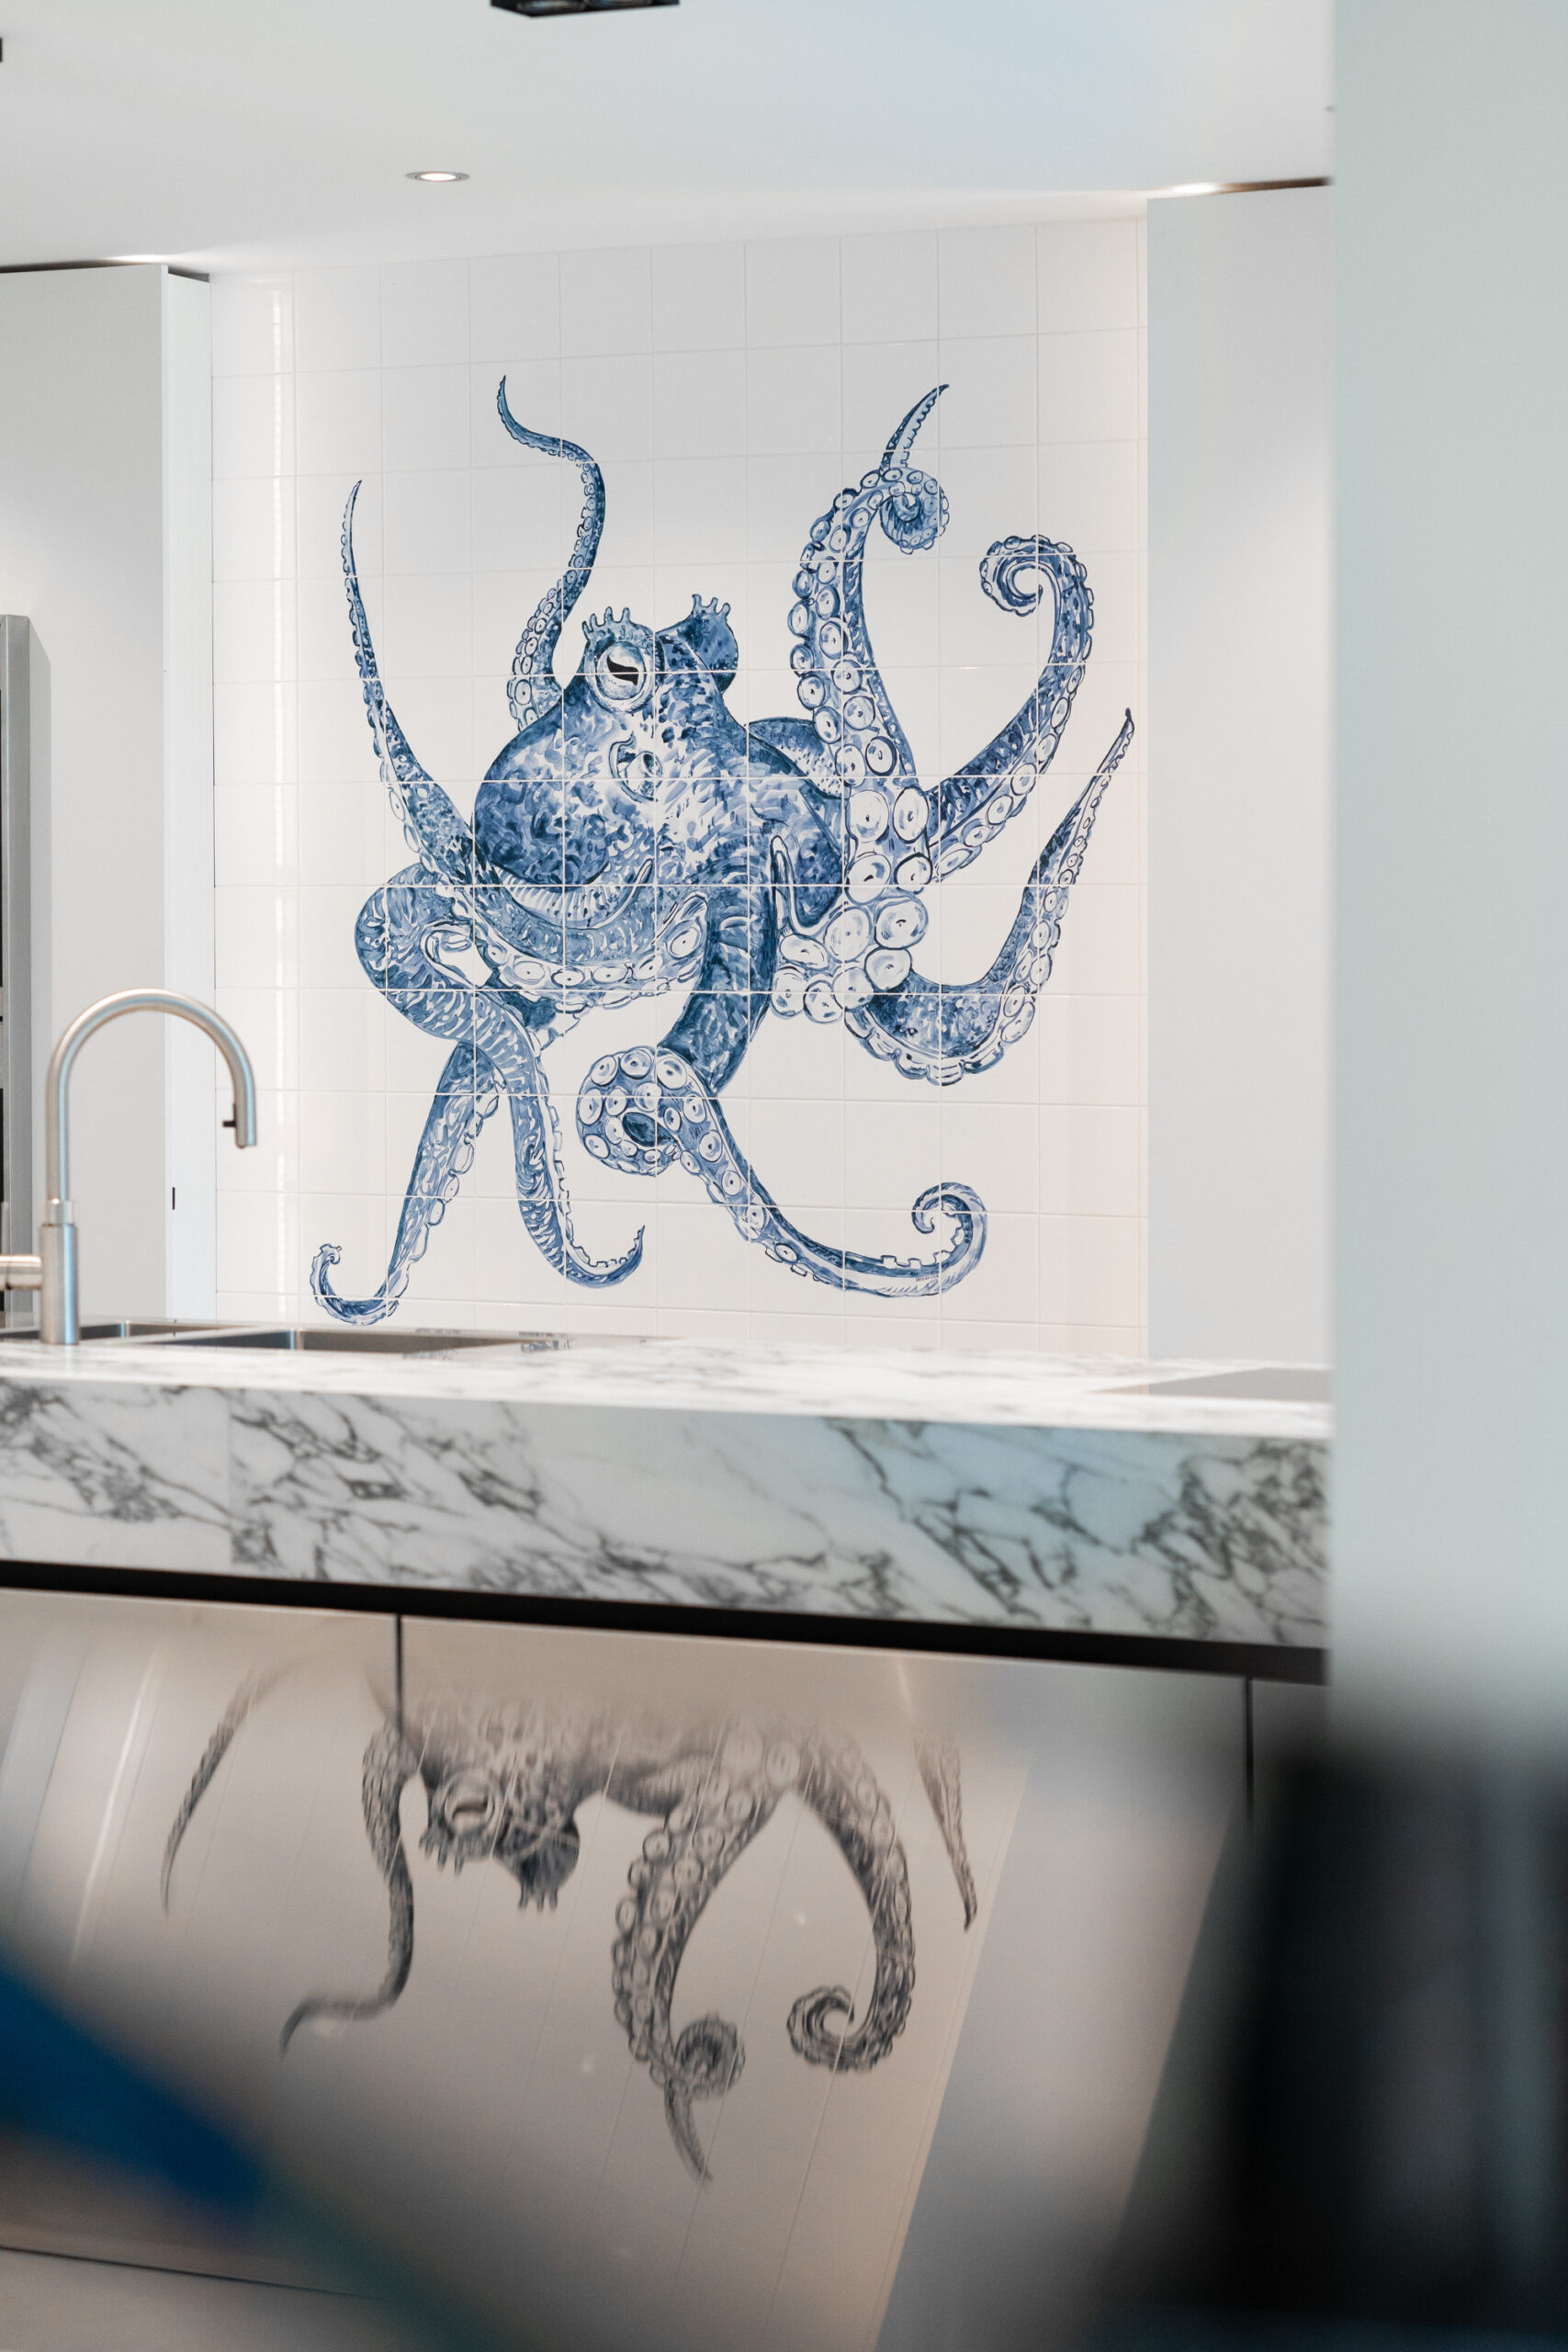 Giant octopus tile panel